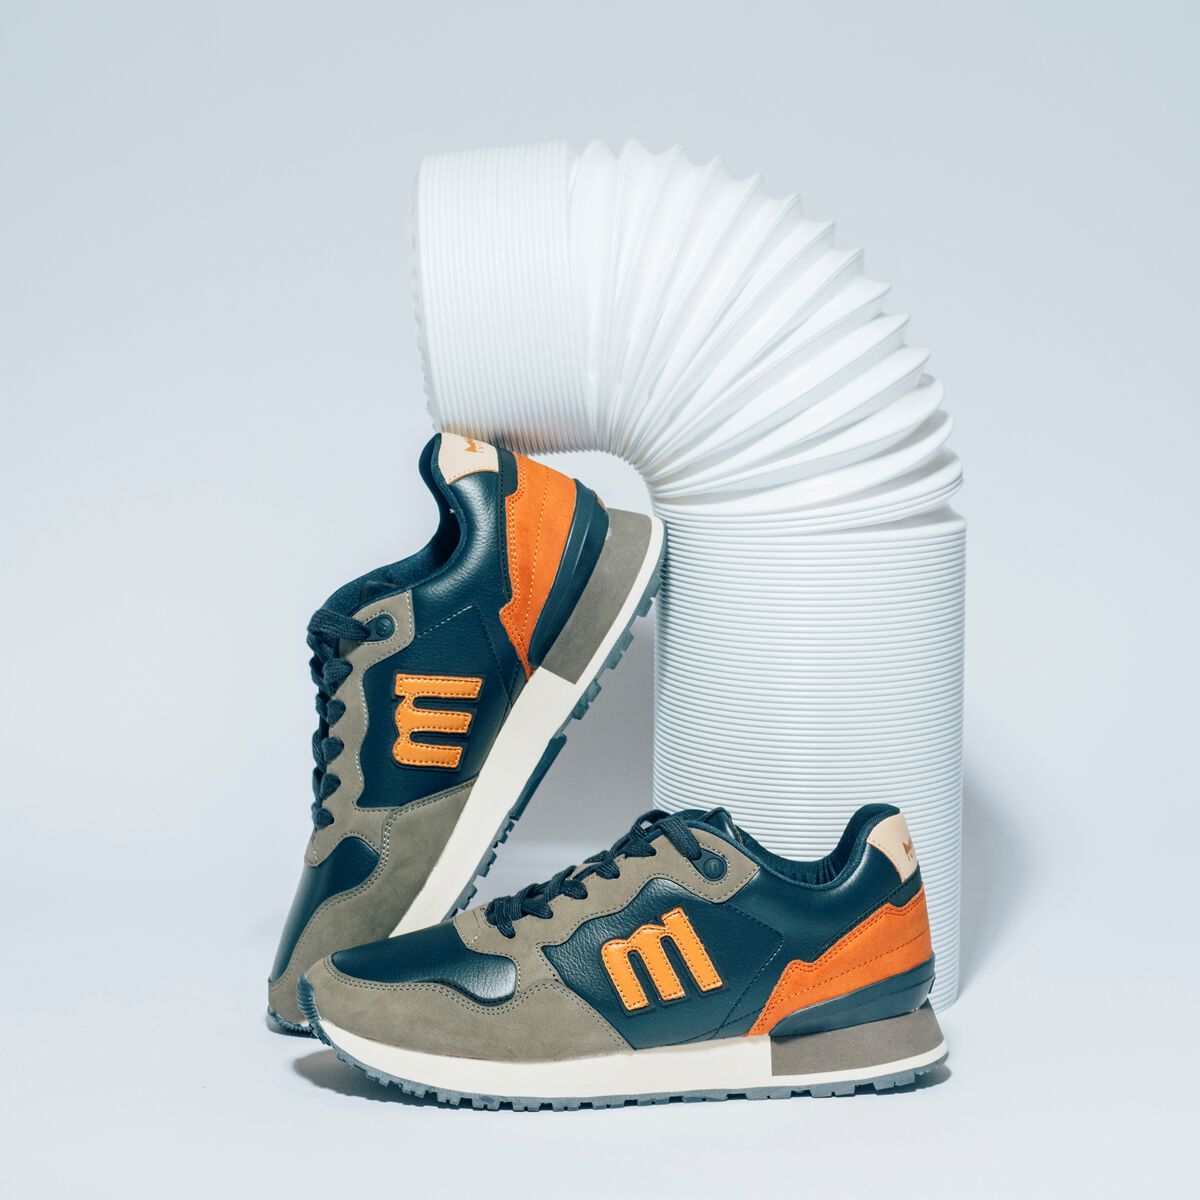 Sneakers de Homem modelo JOGGO CLASSIC de MTNG image number 2